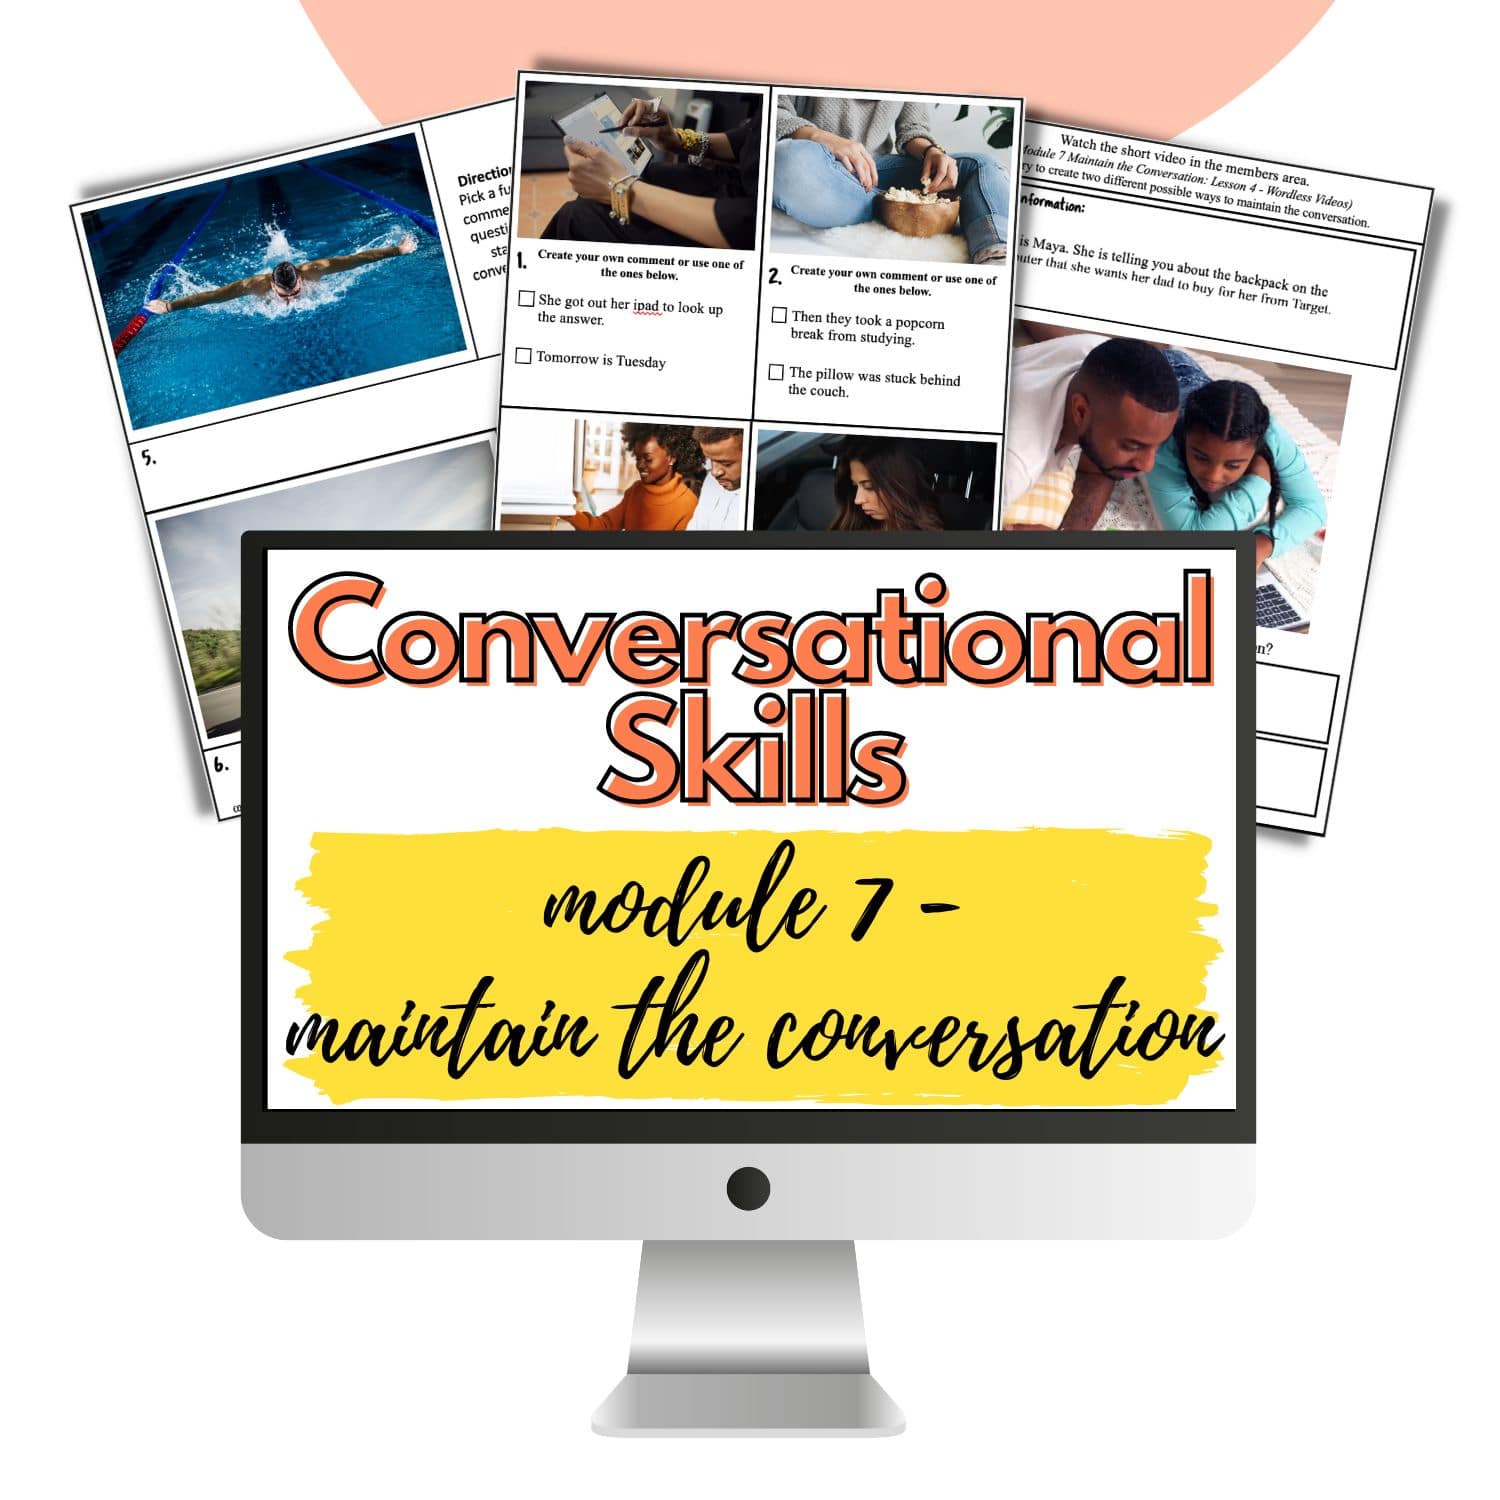 conversational skills curriculum maintaining the conversation